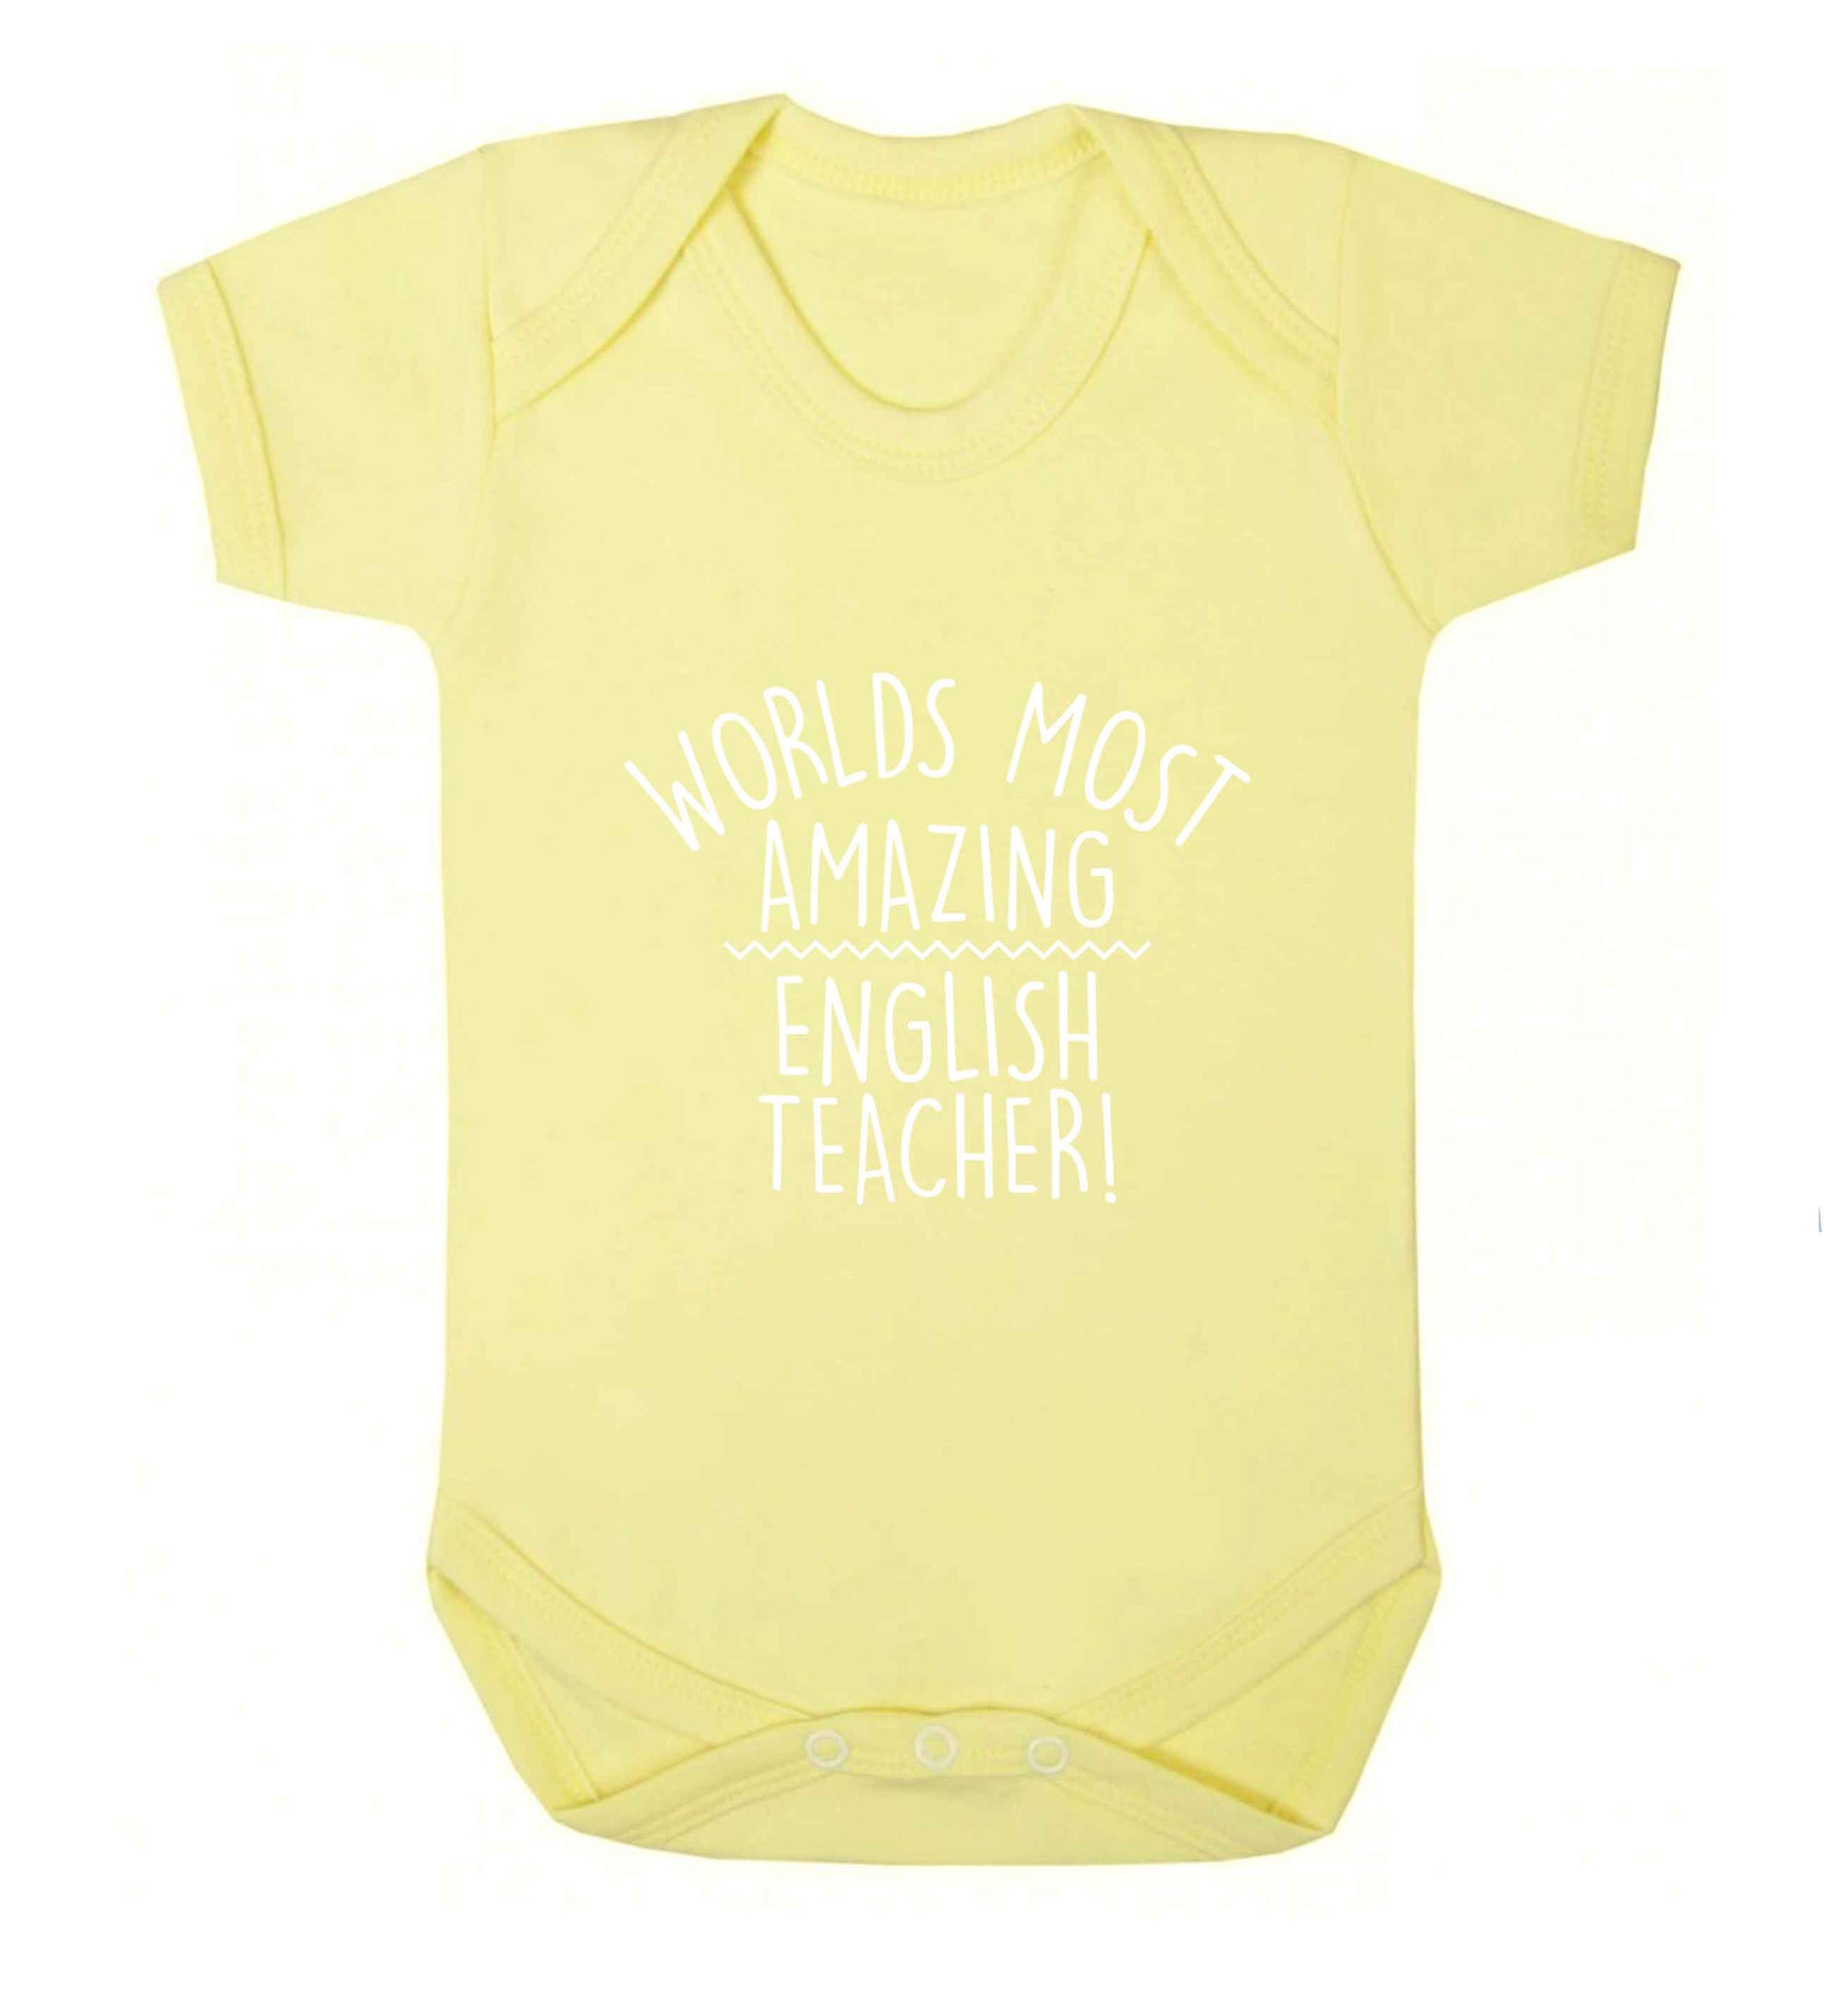 Worlds most amazing English teacher baby vest pale yellow 18-24 months